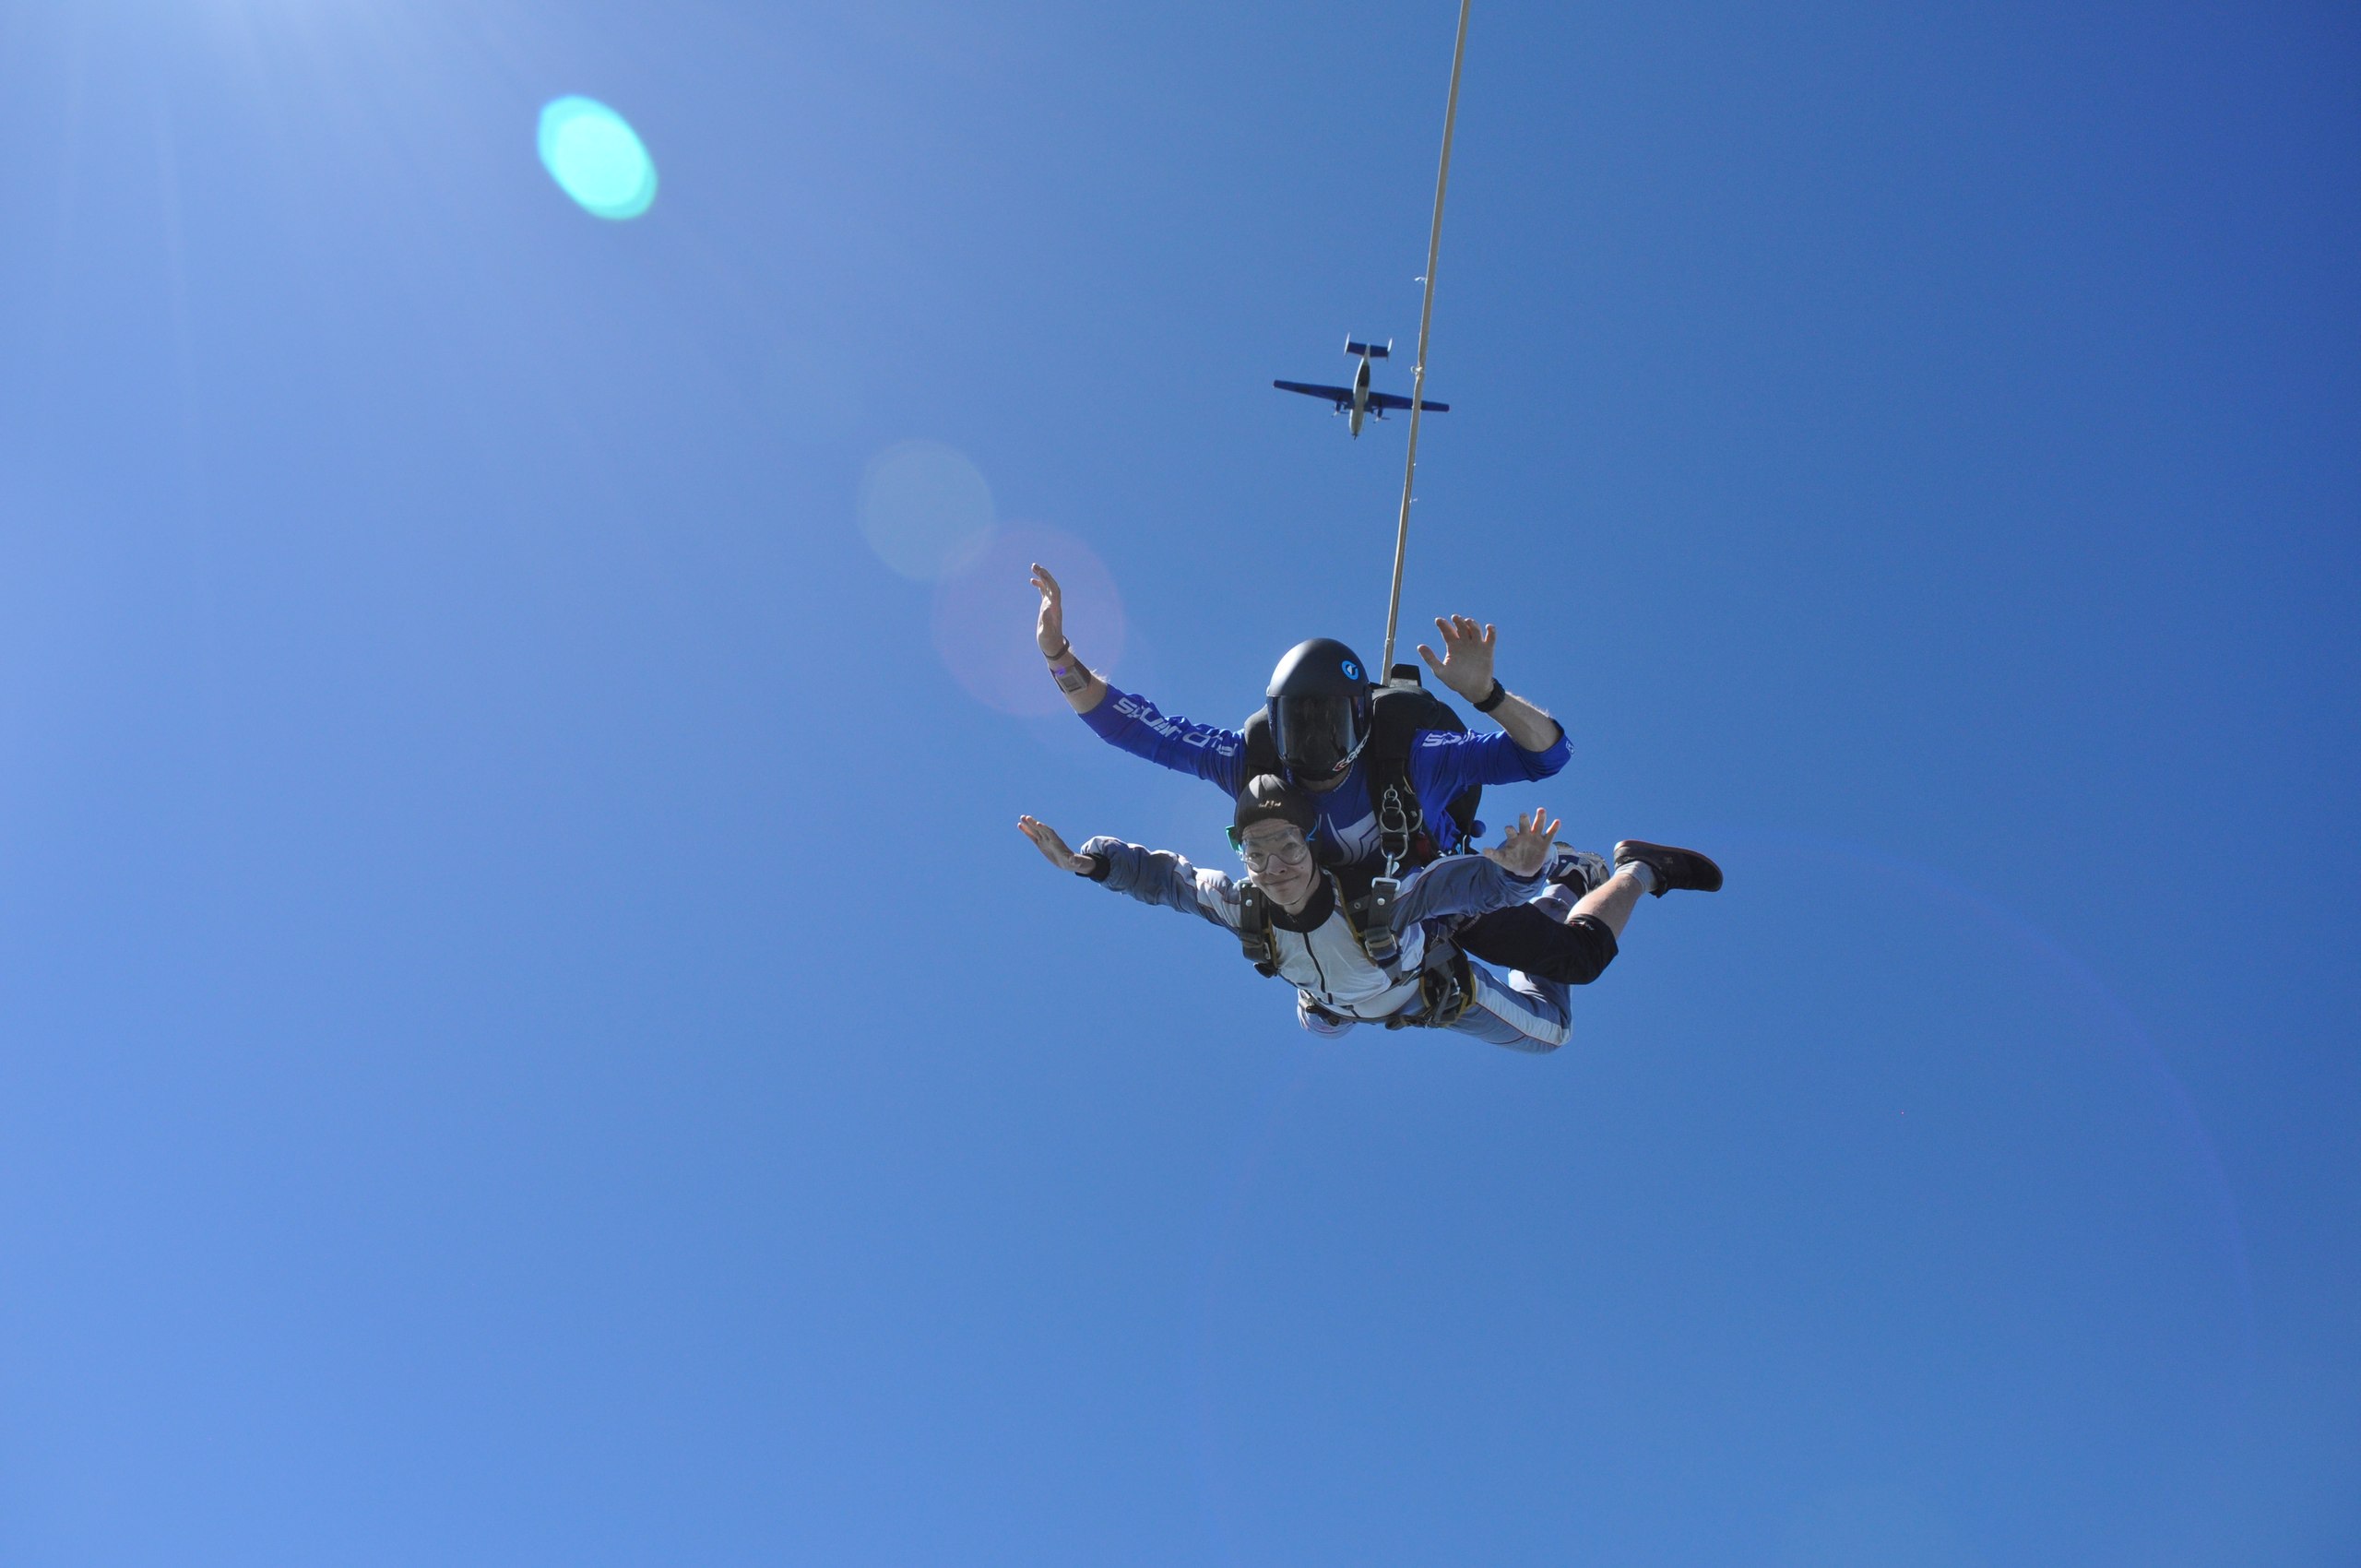 My first parachute jump in tandem